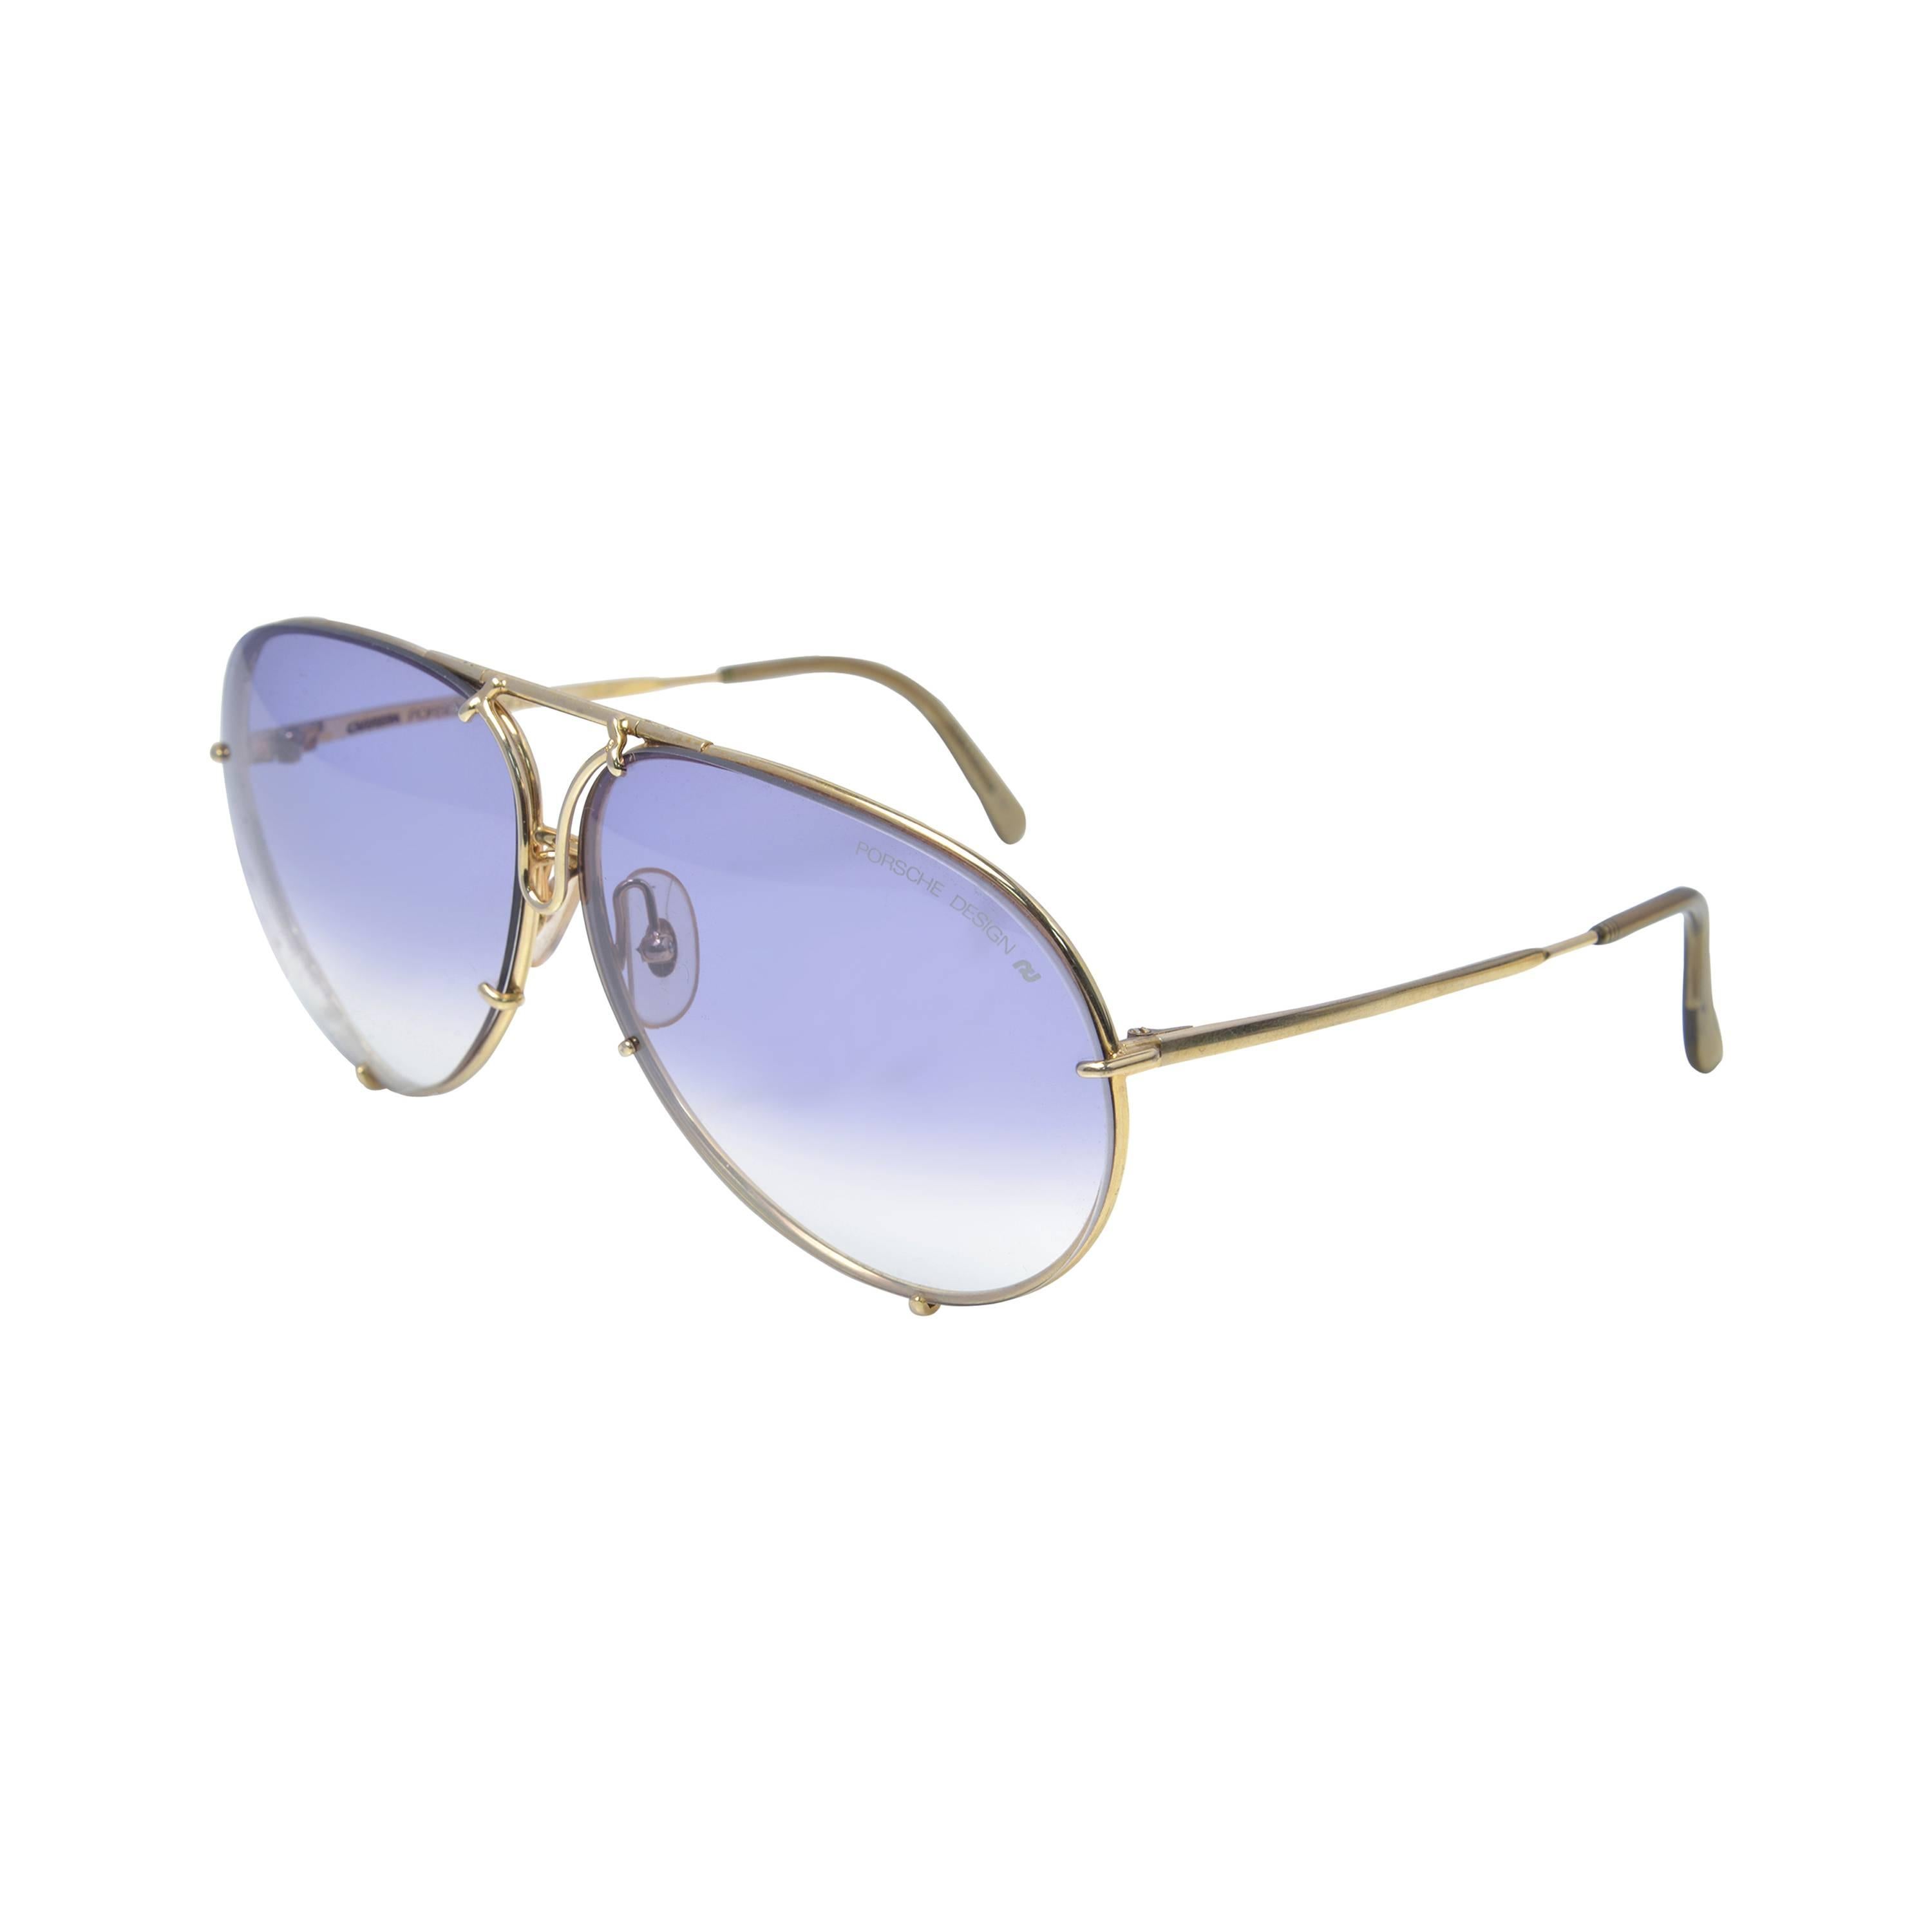 New 1980s Porsche Design by Carrera Gold frame Sunglasses